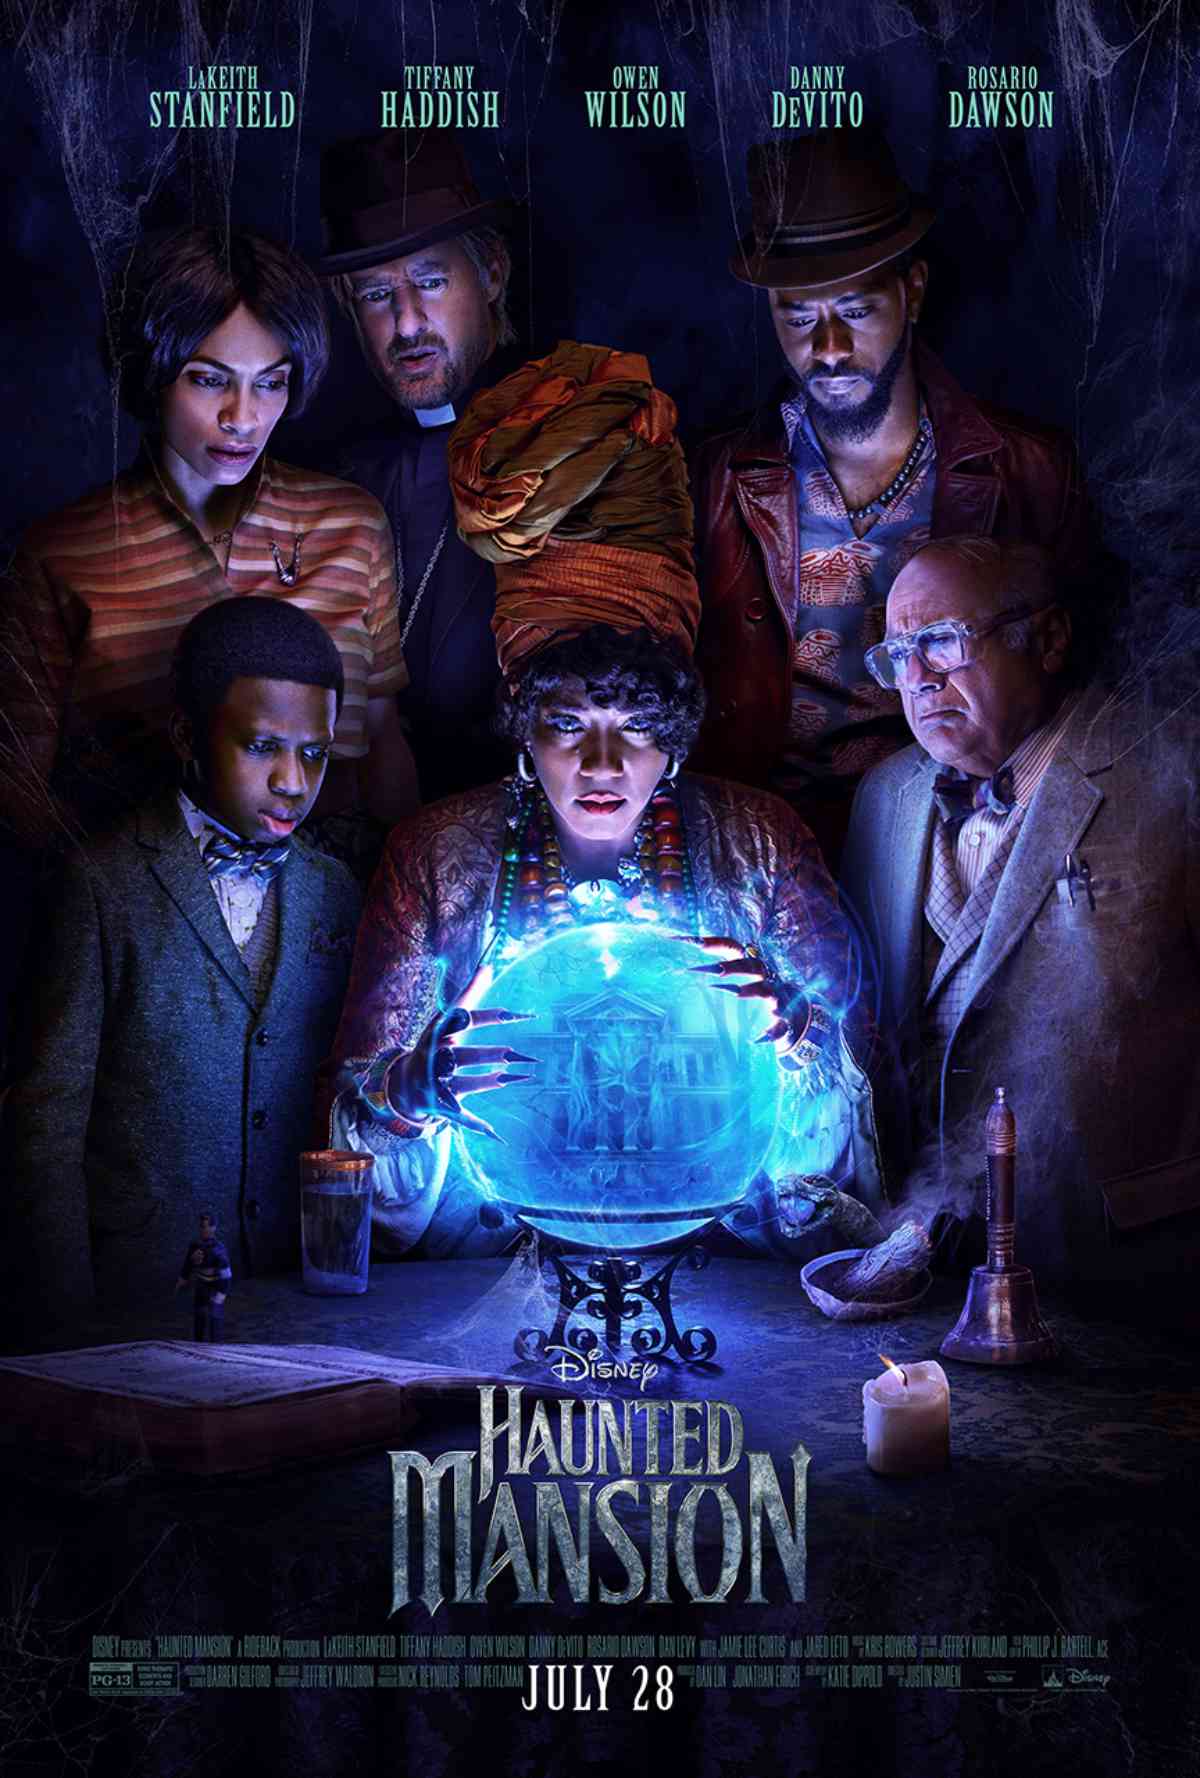 Haunted Mansion Movie